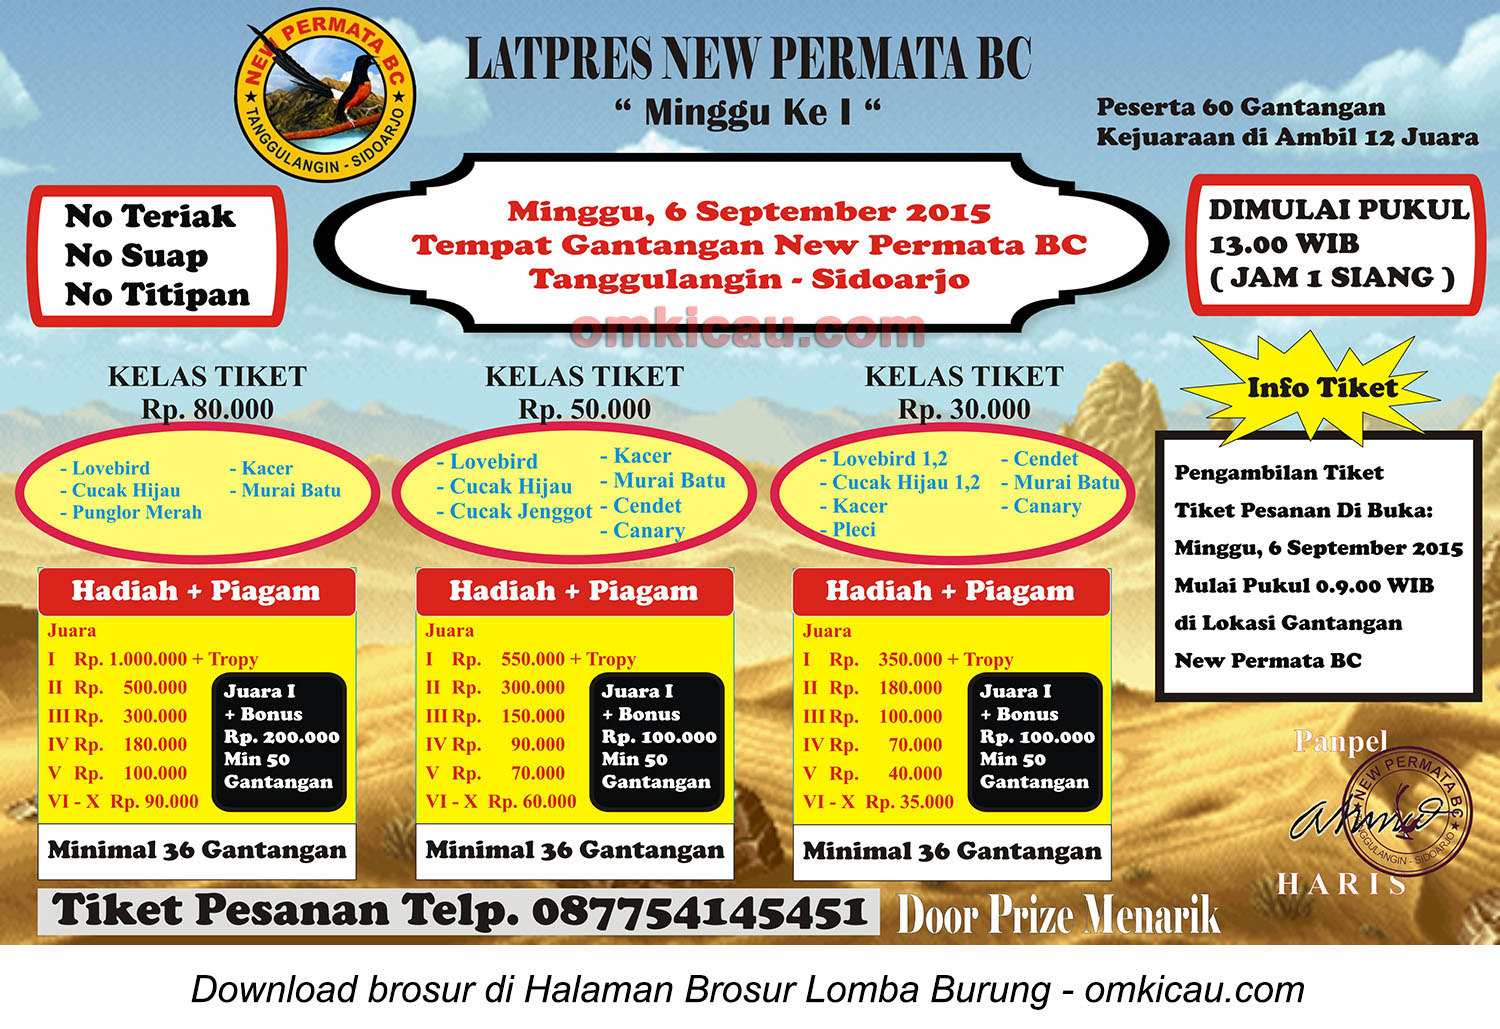 Brosur Latpres New Permata BC Minggu I, Sidoarjo, 6 September 2015